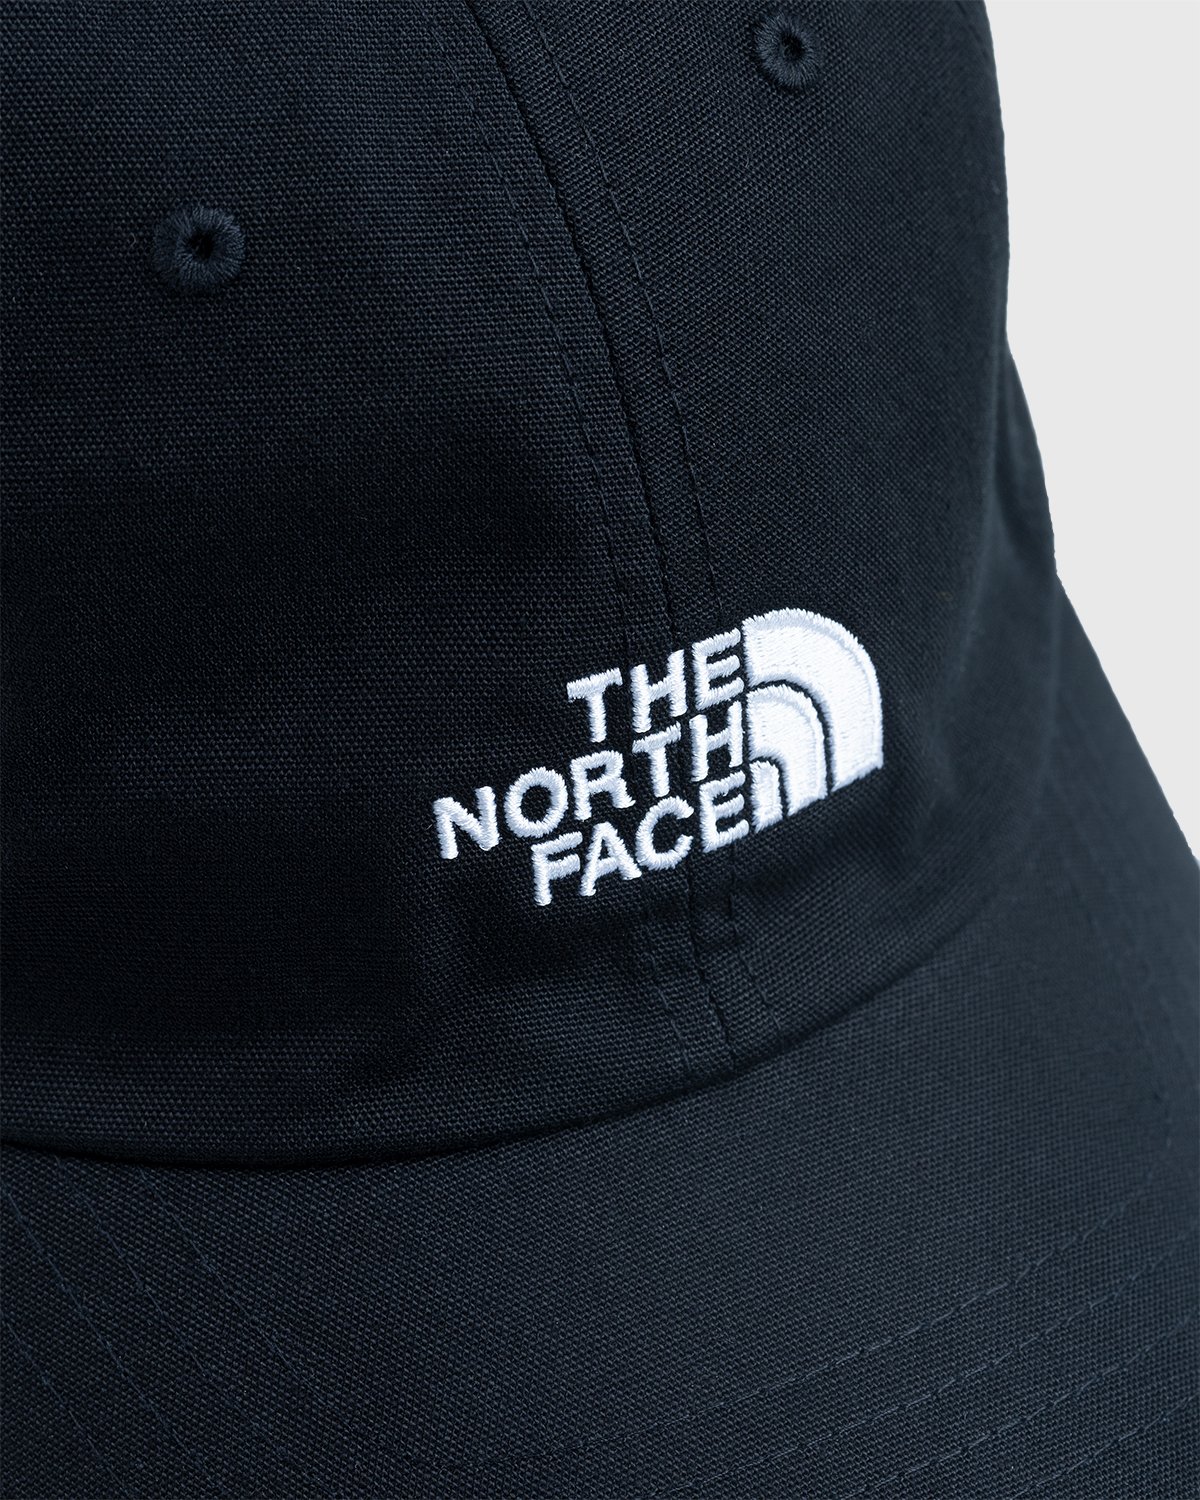 The North Face - Norm Cap Black - Accessories - Black - Image 6